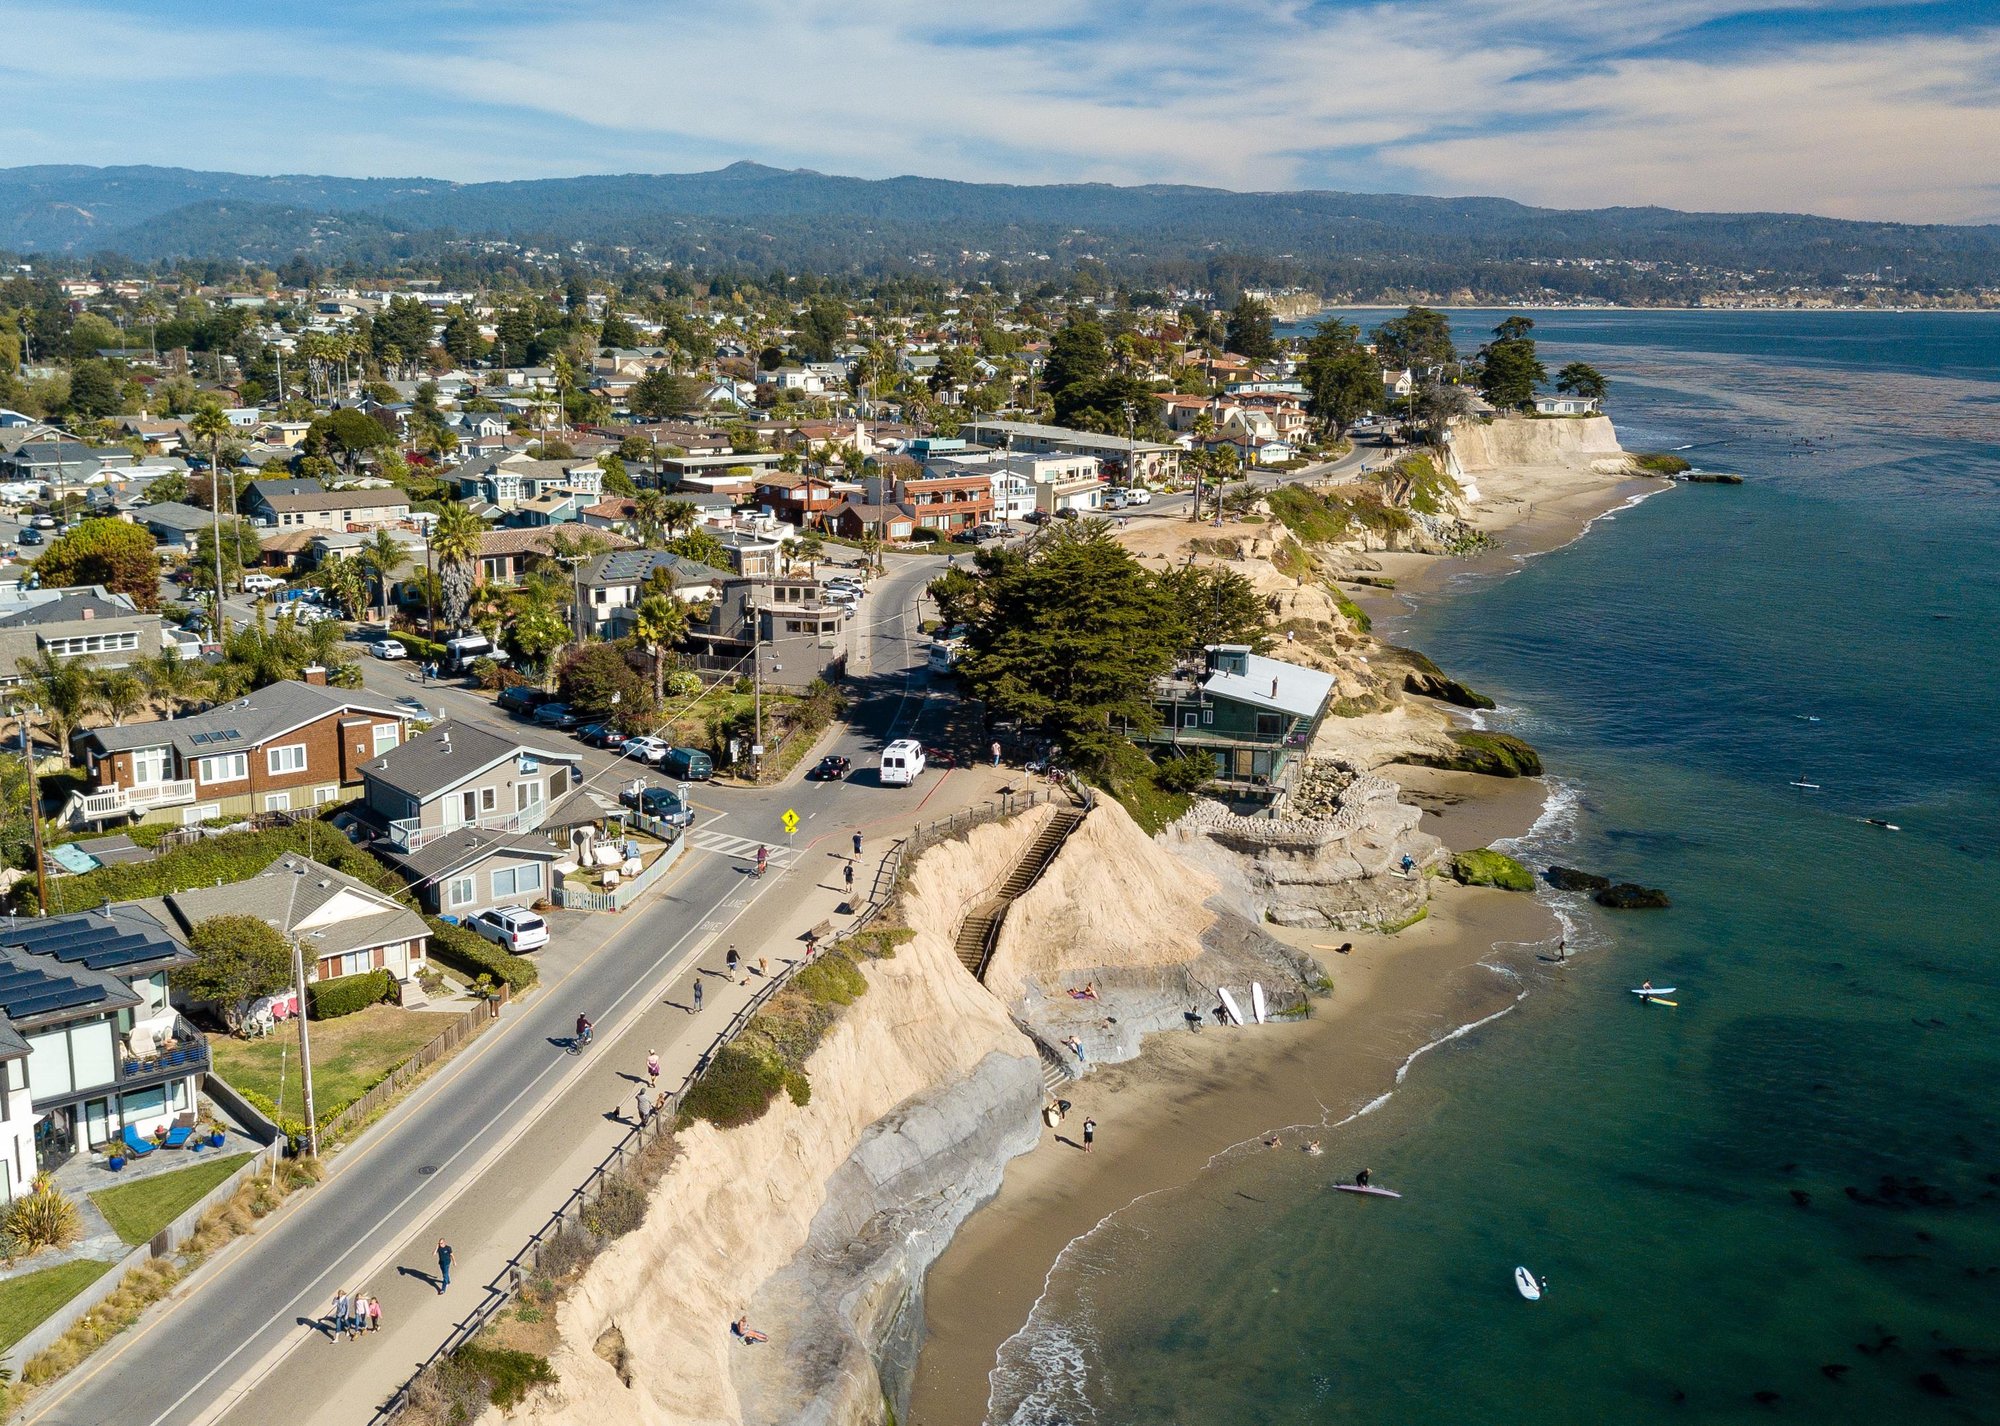 “Aerial shot of coastal area of Santa Cruz, California” - Source: WATimmer // Shutterstock